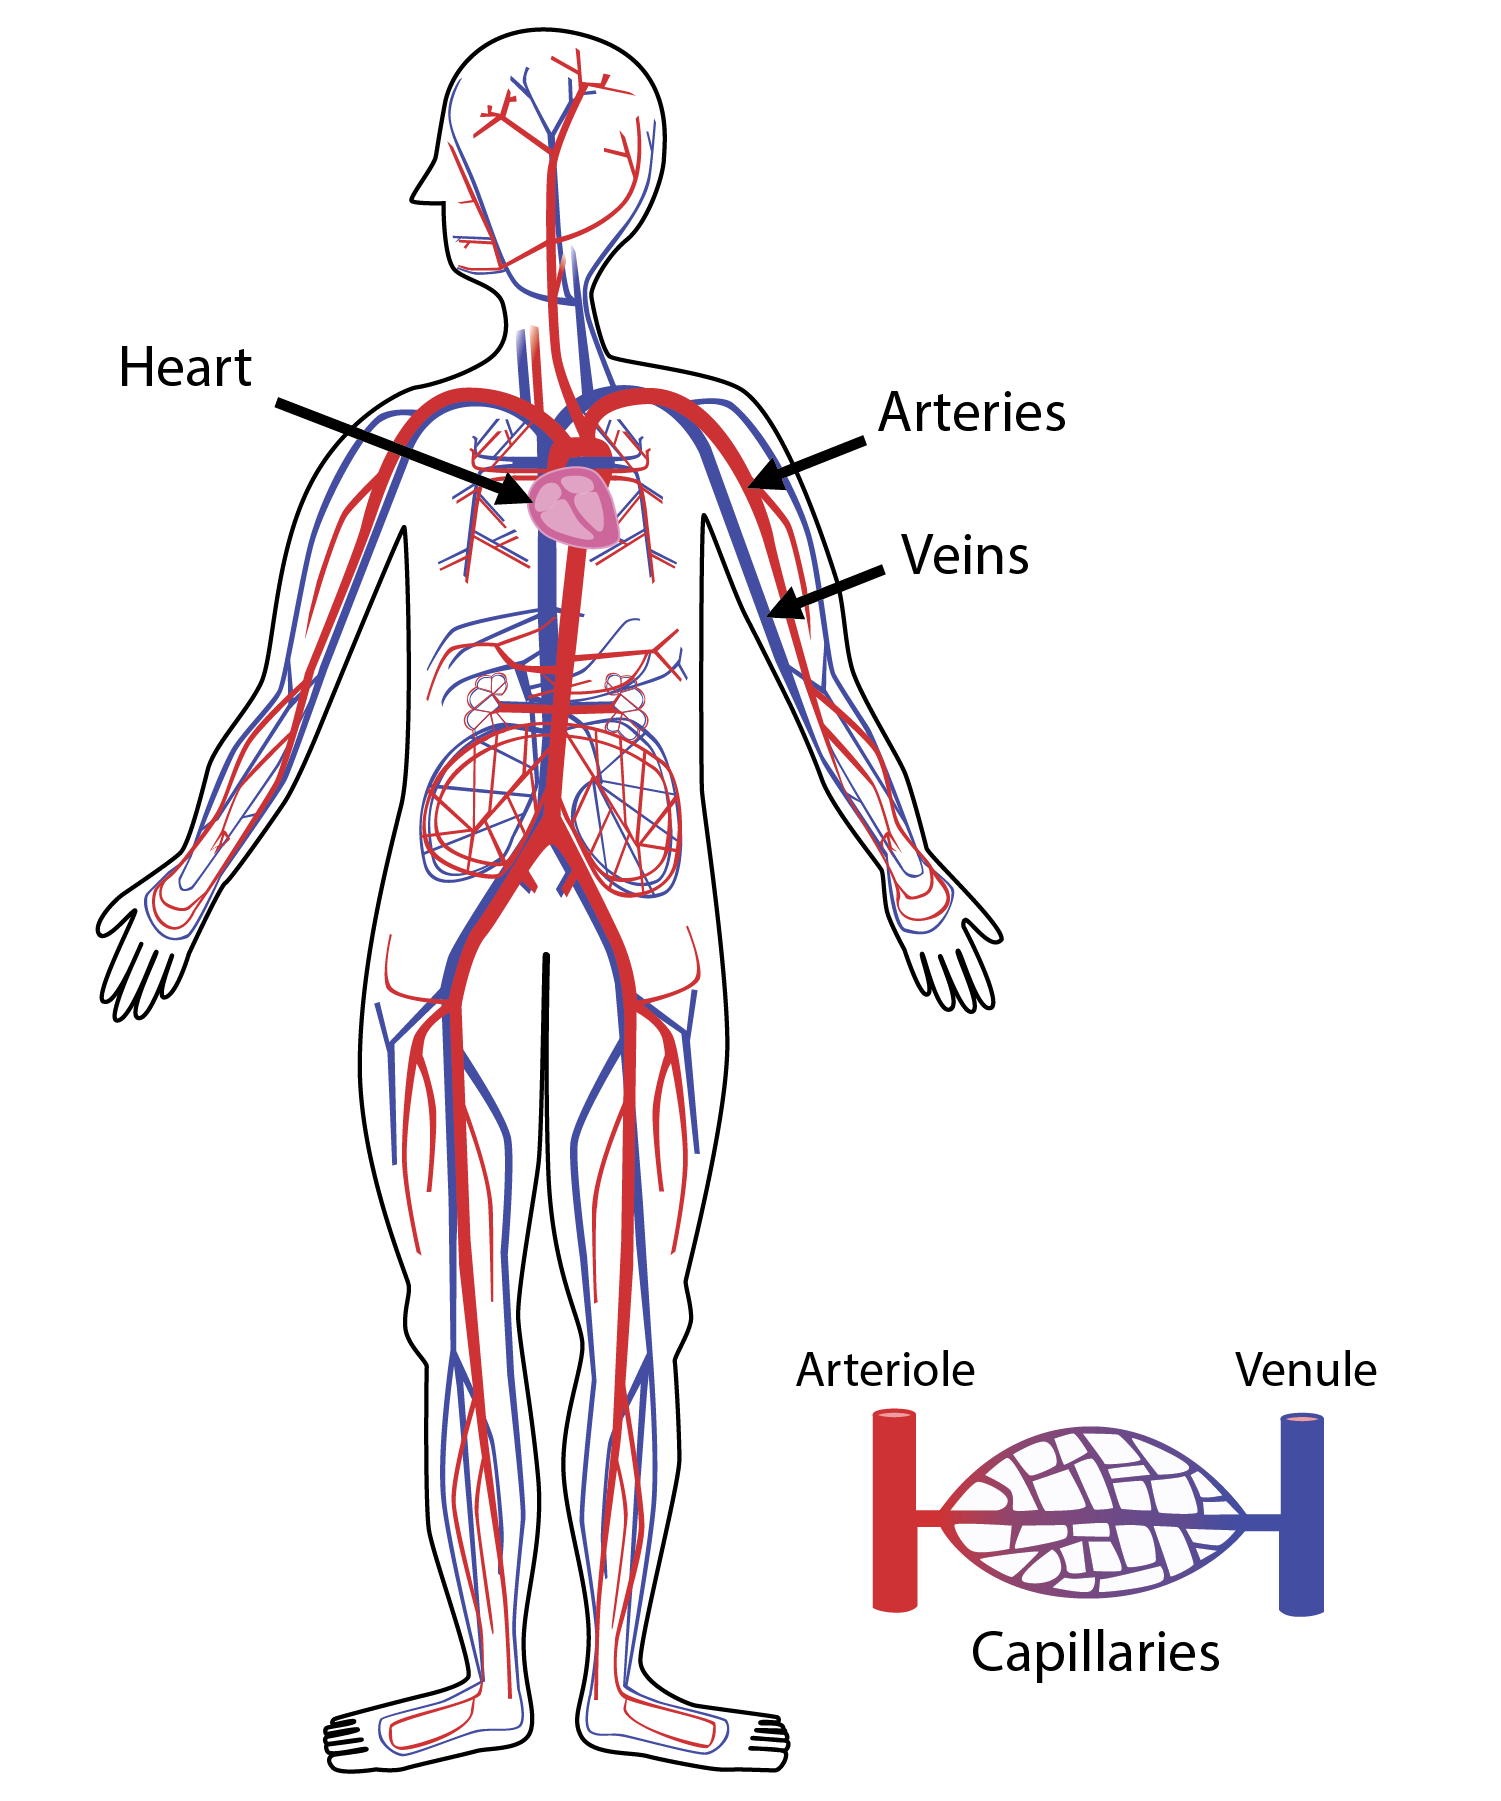 Human cardiovascular system anatomy illustration